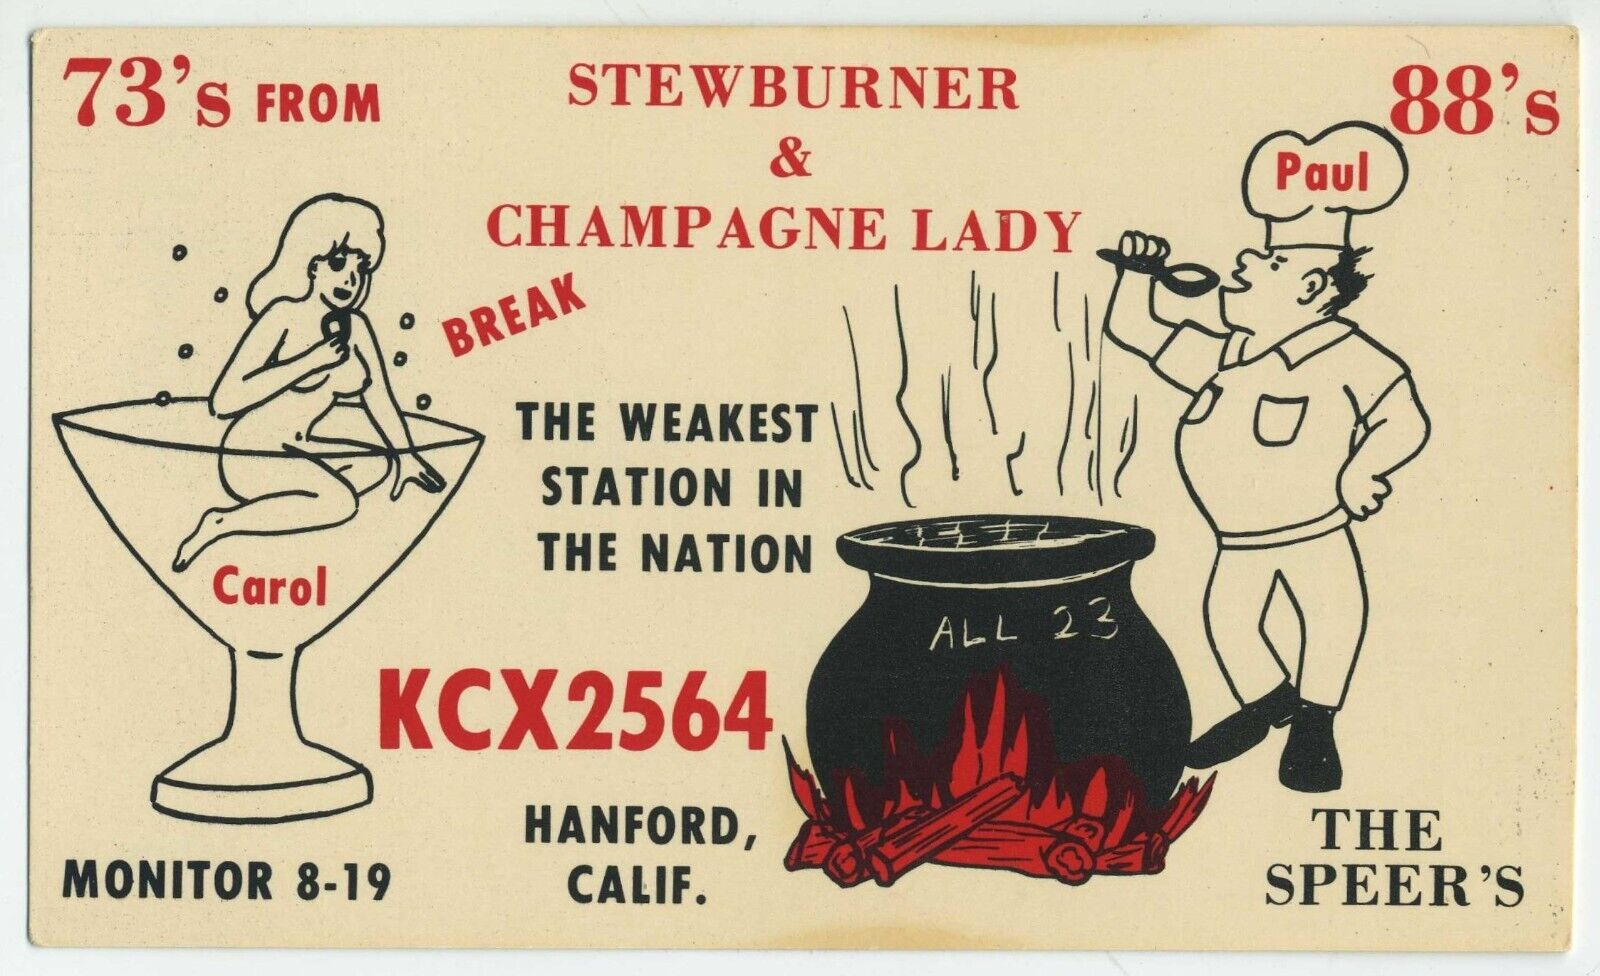 1950s Hanford CA Postcard QSL Ham Radio STEWBURNER & CHAMPAGNE LADY THE SPEER'S